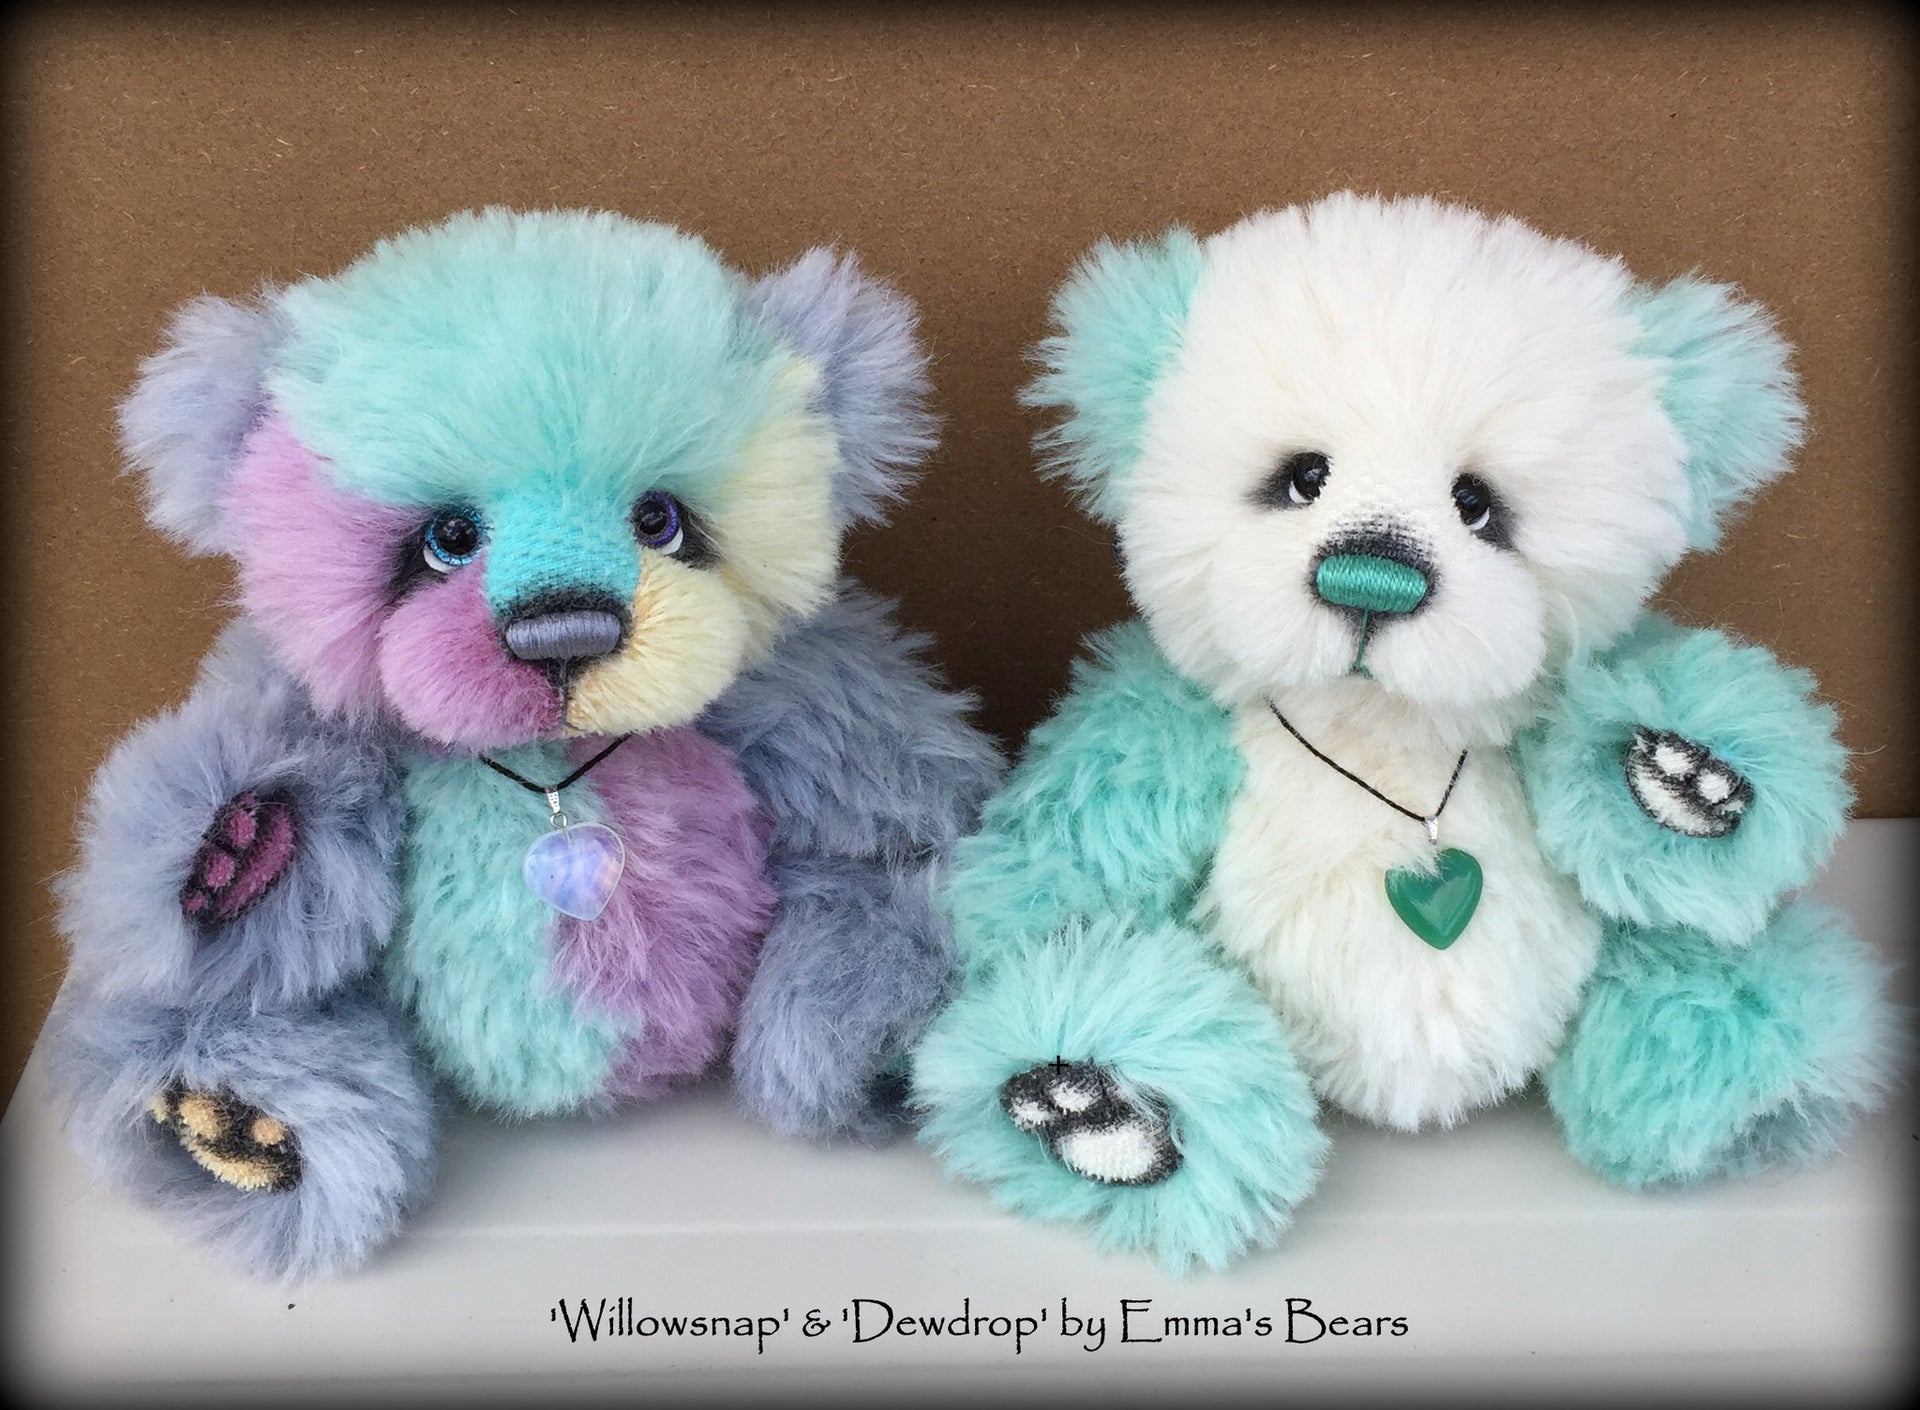 Order YOUR Custom Emma's Bears Creation